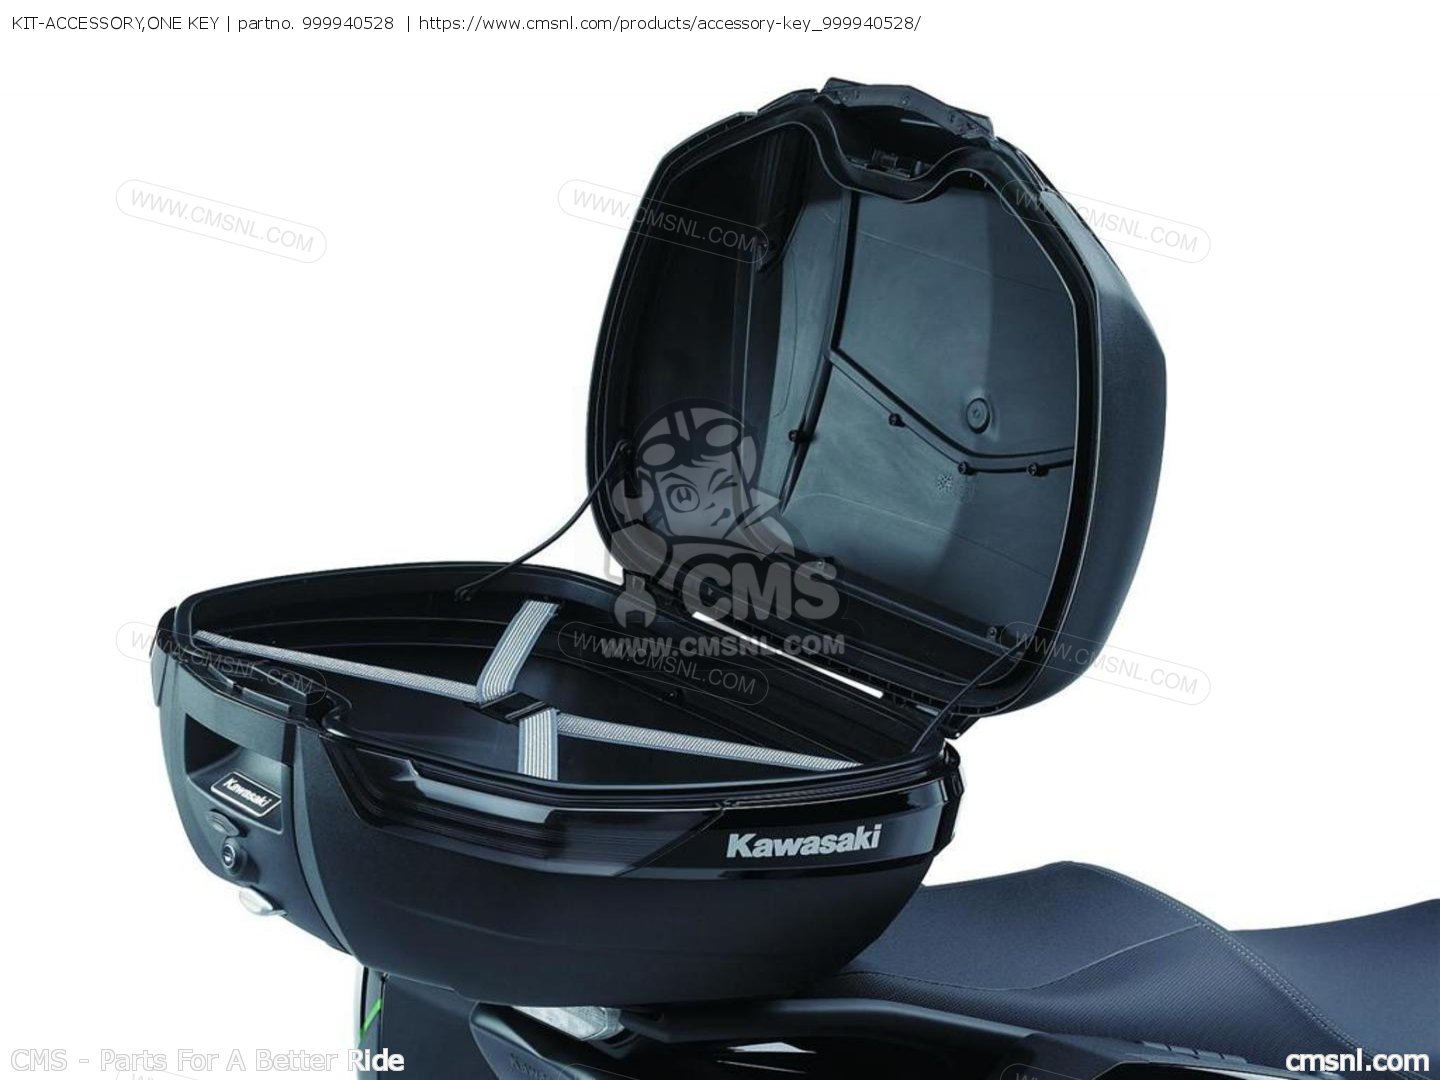 999940528: Kit-accessory,one Key Kawasaki - buy the 99994-0528 at 